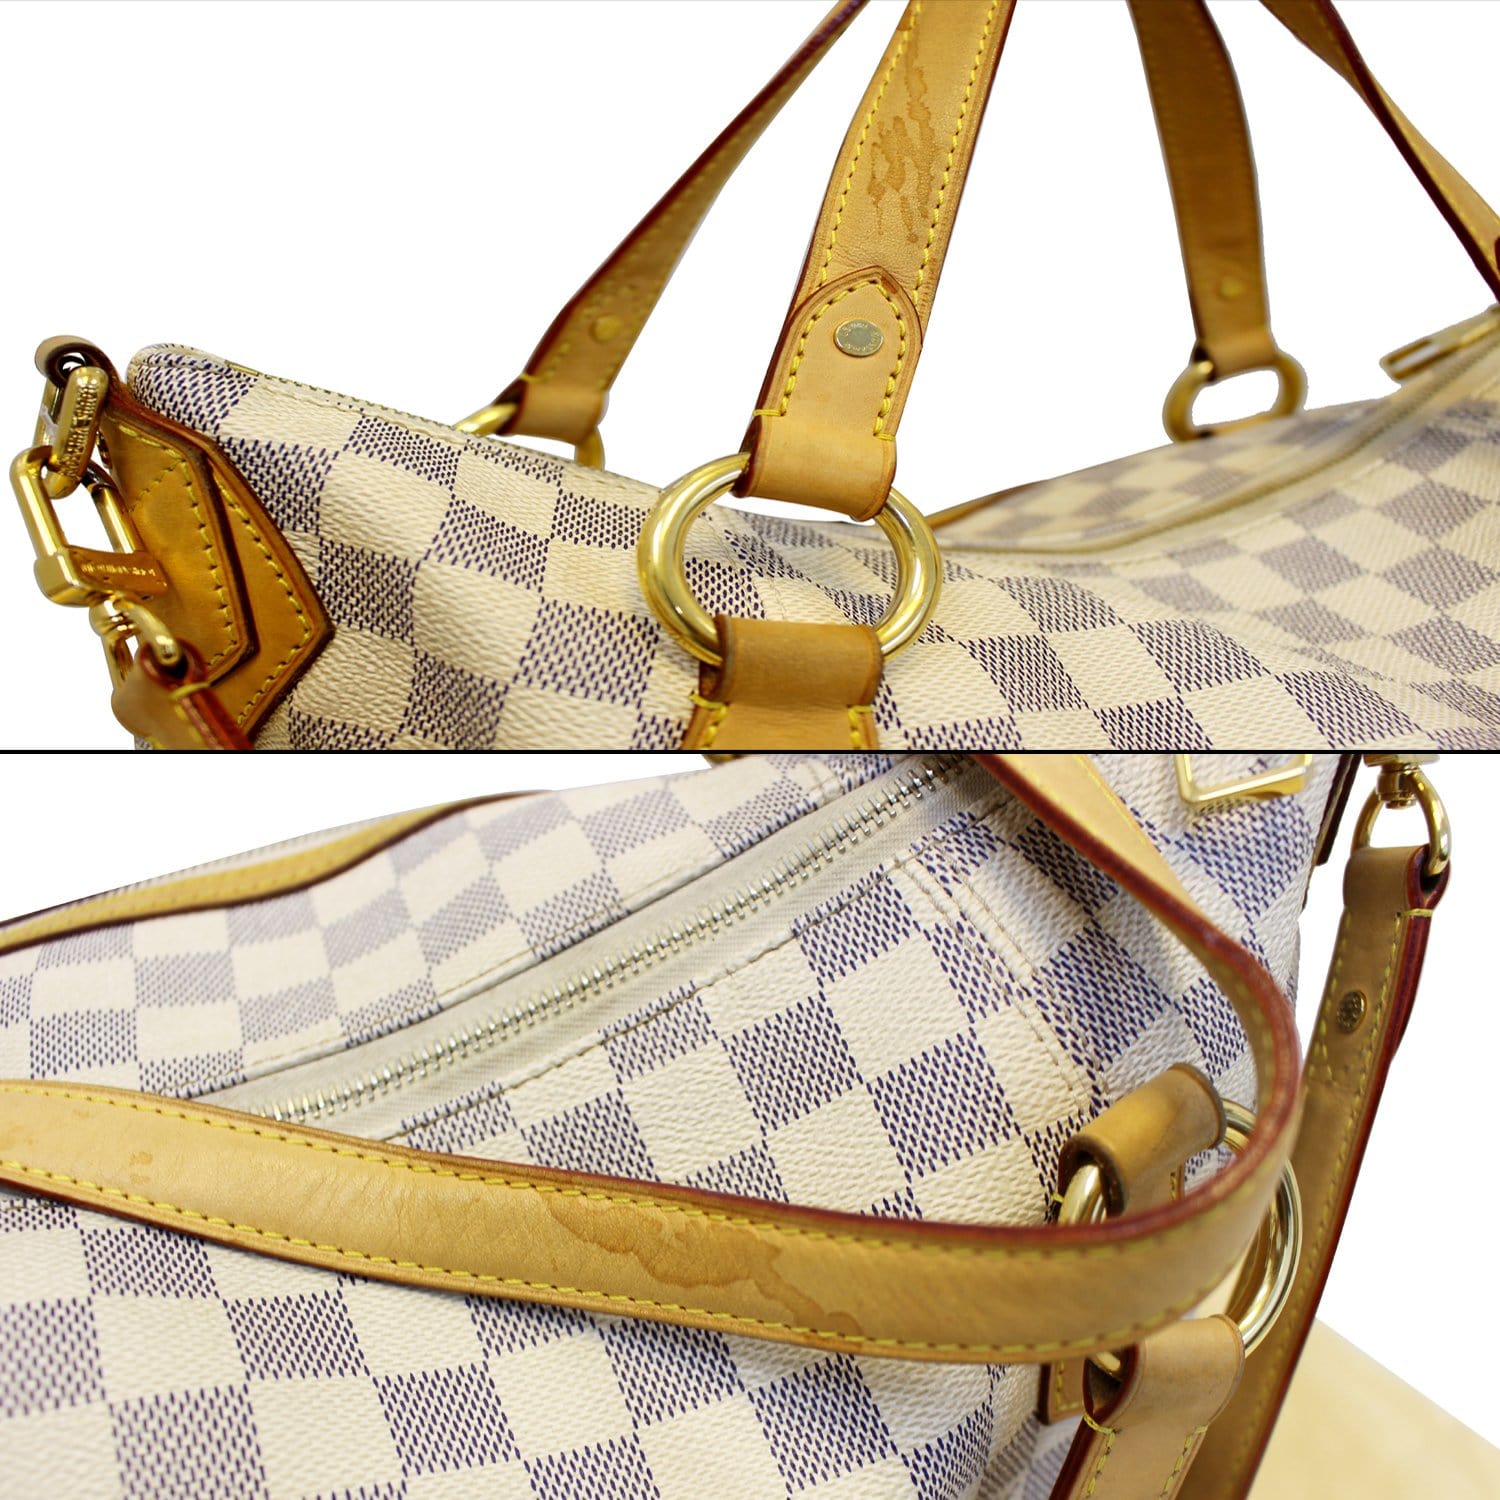 Louis Vuitton, an 'Evora' damier azur handbag, 2011. - Bukowskis